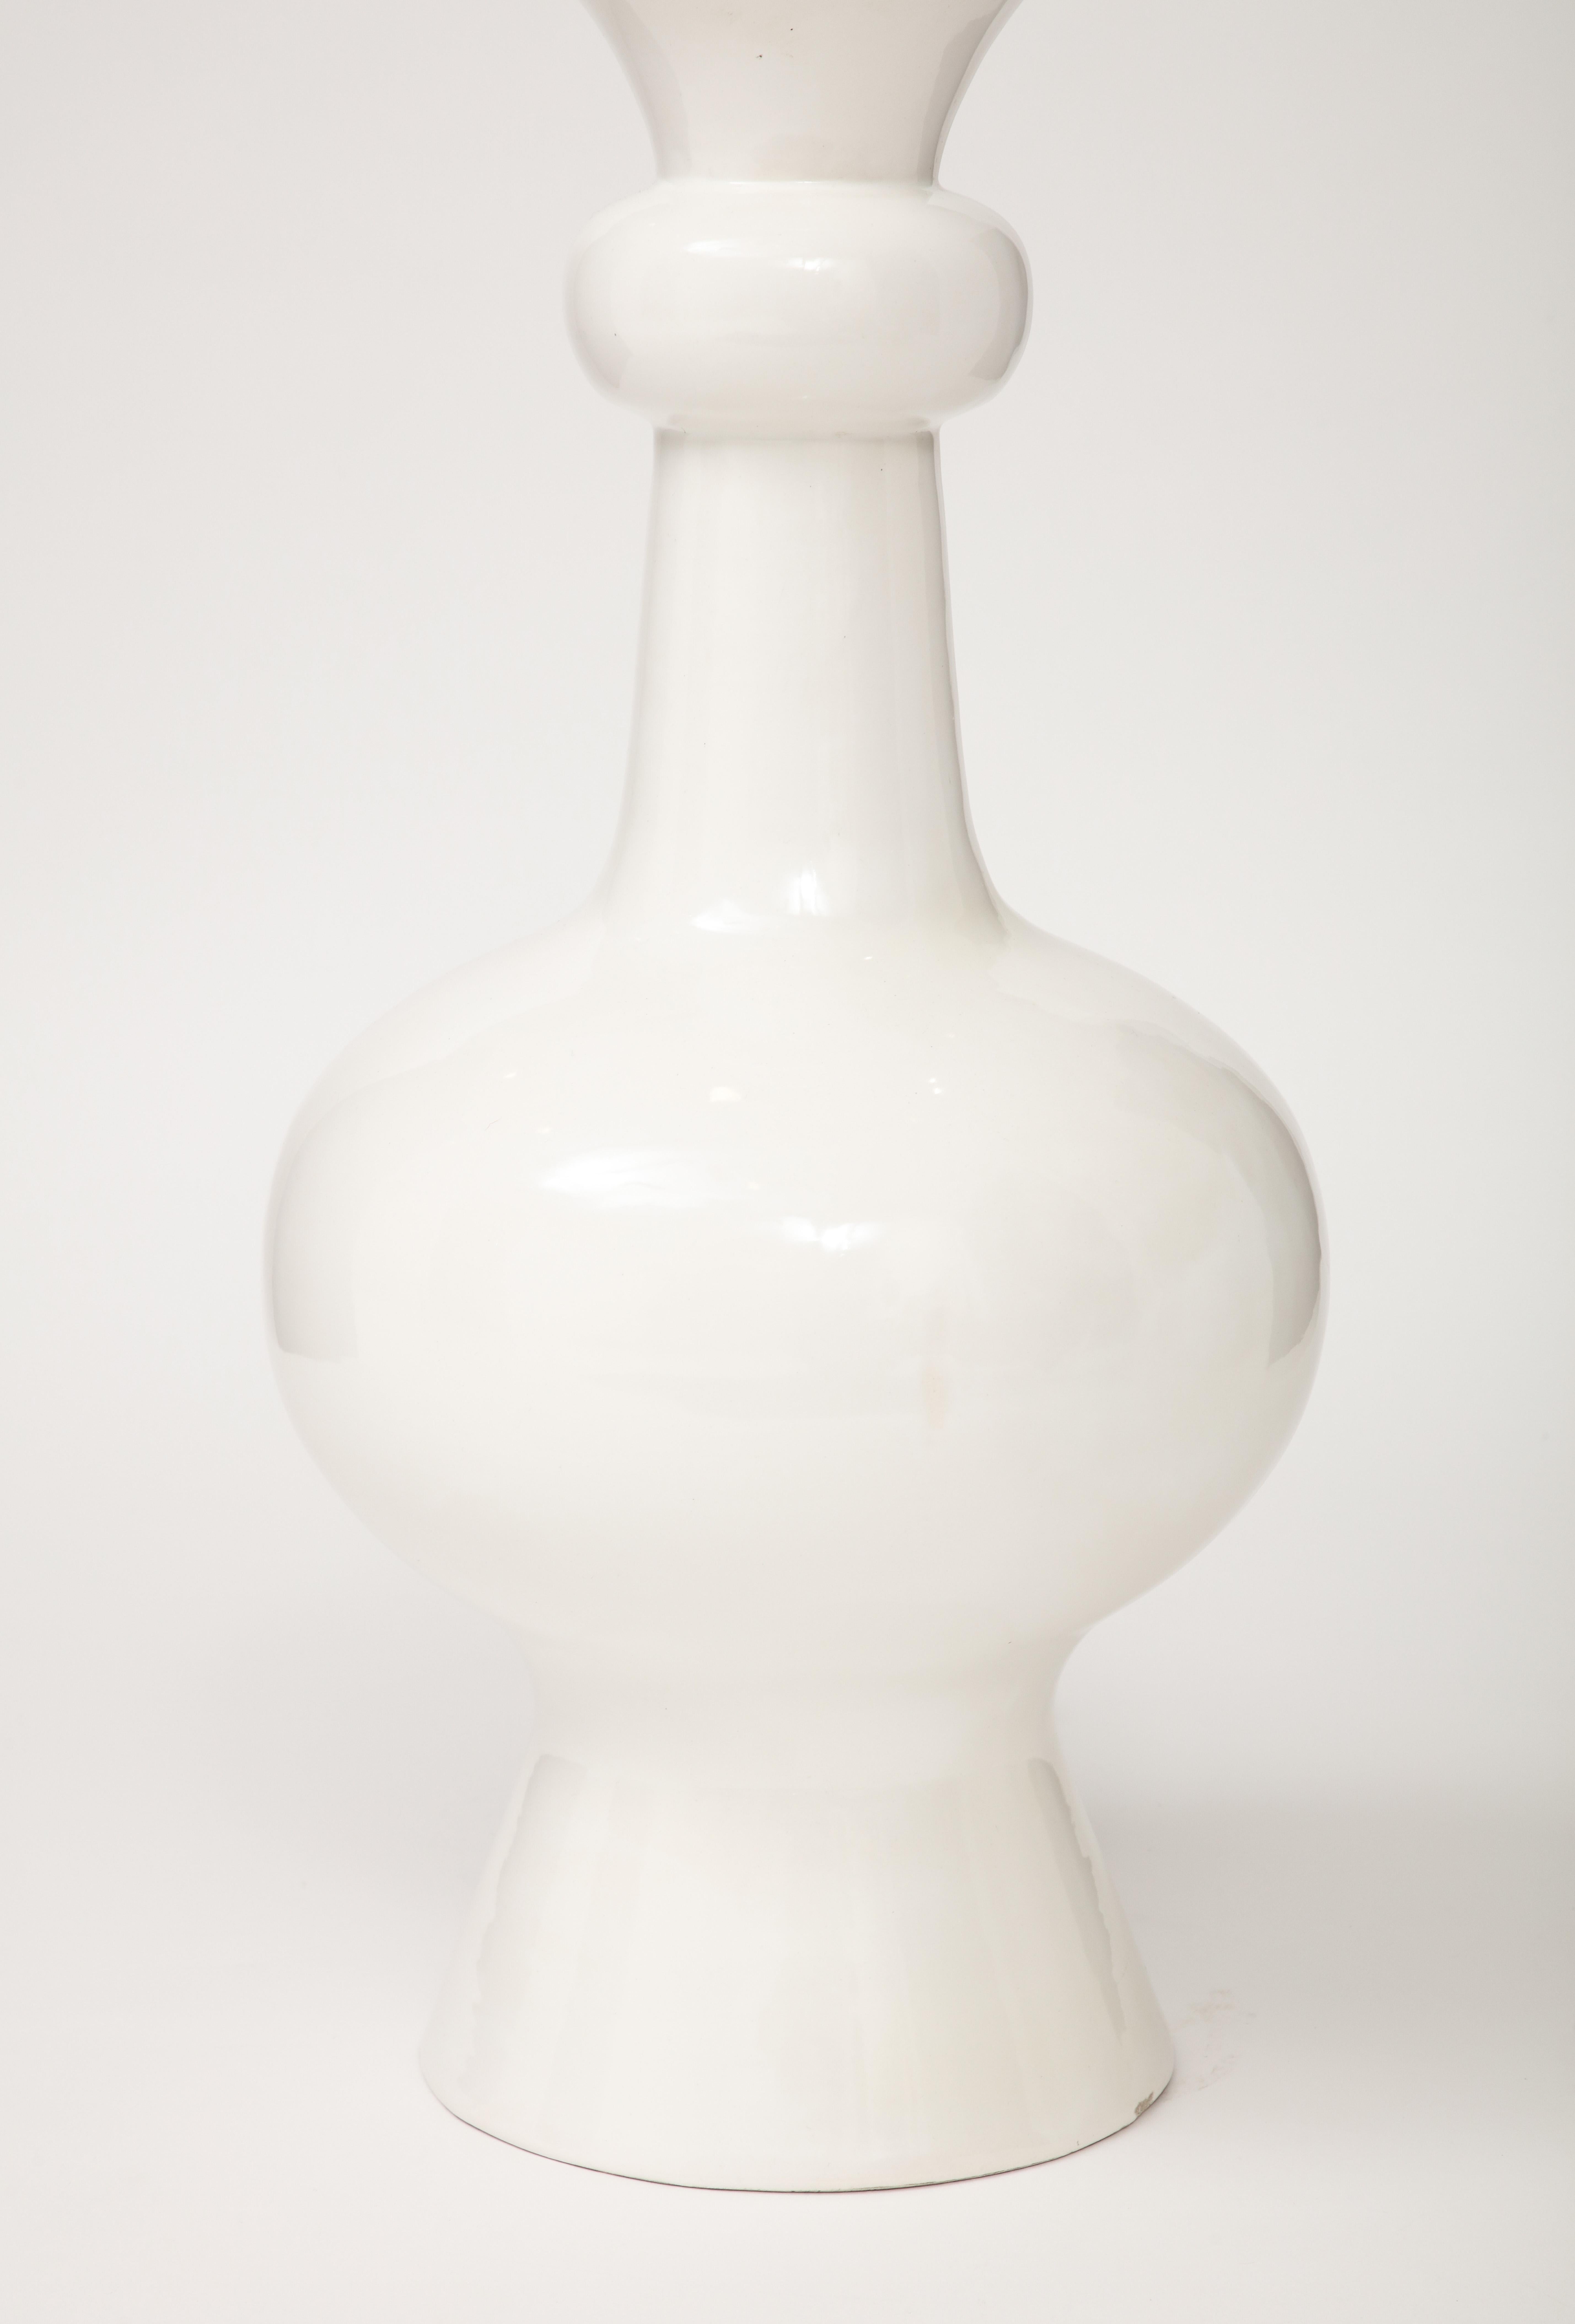 Large Scale Italian White Ceramic Lamp, 1960's For Sale 2